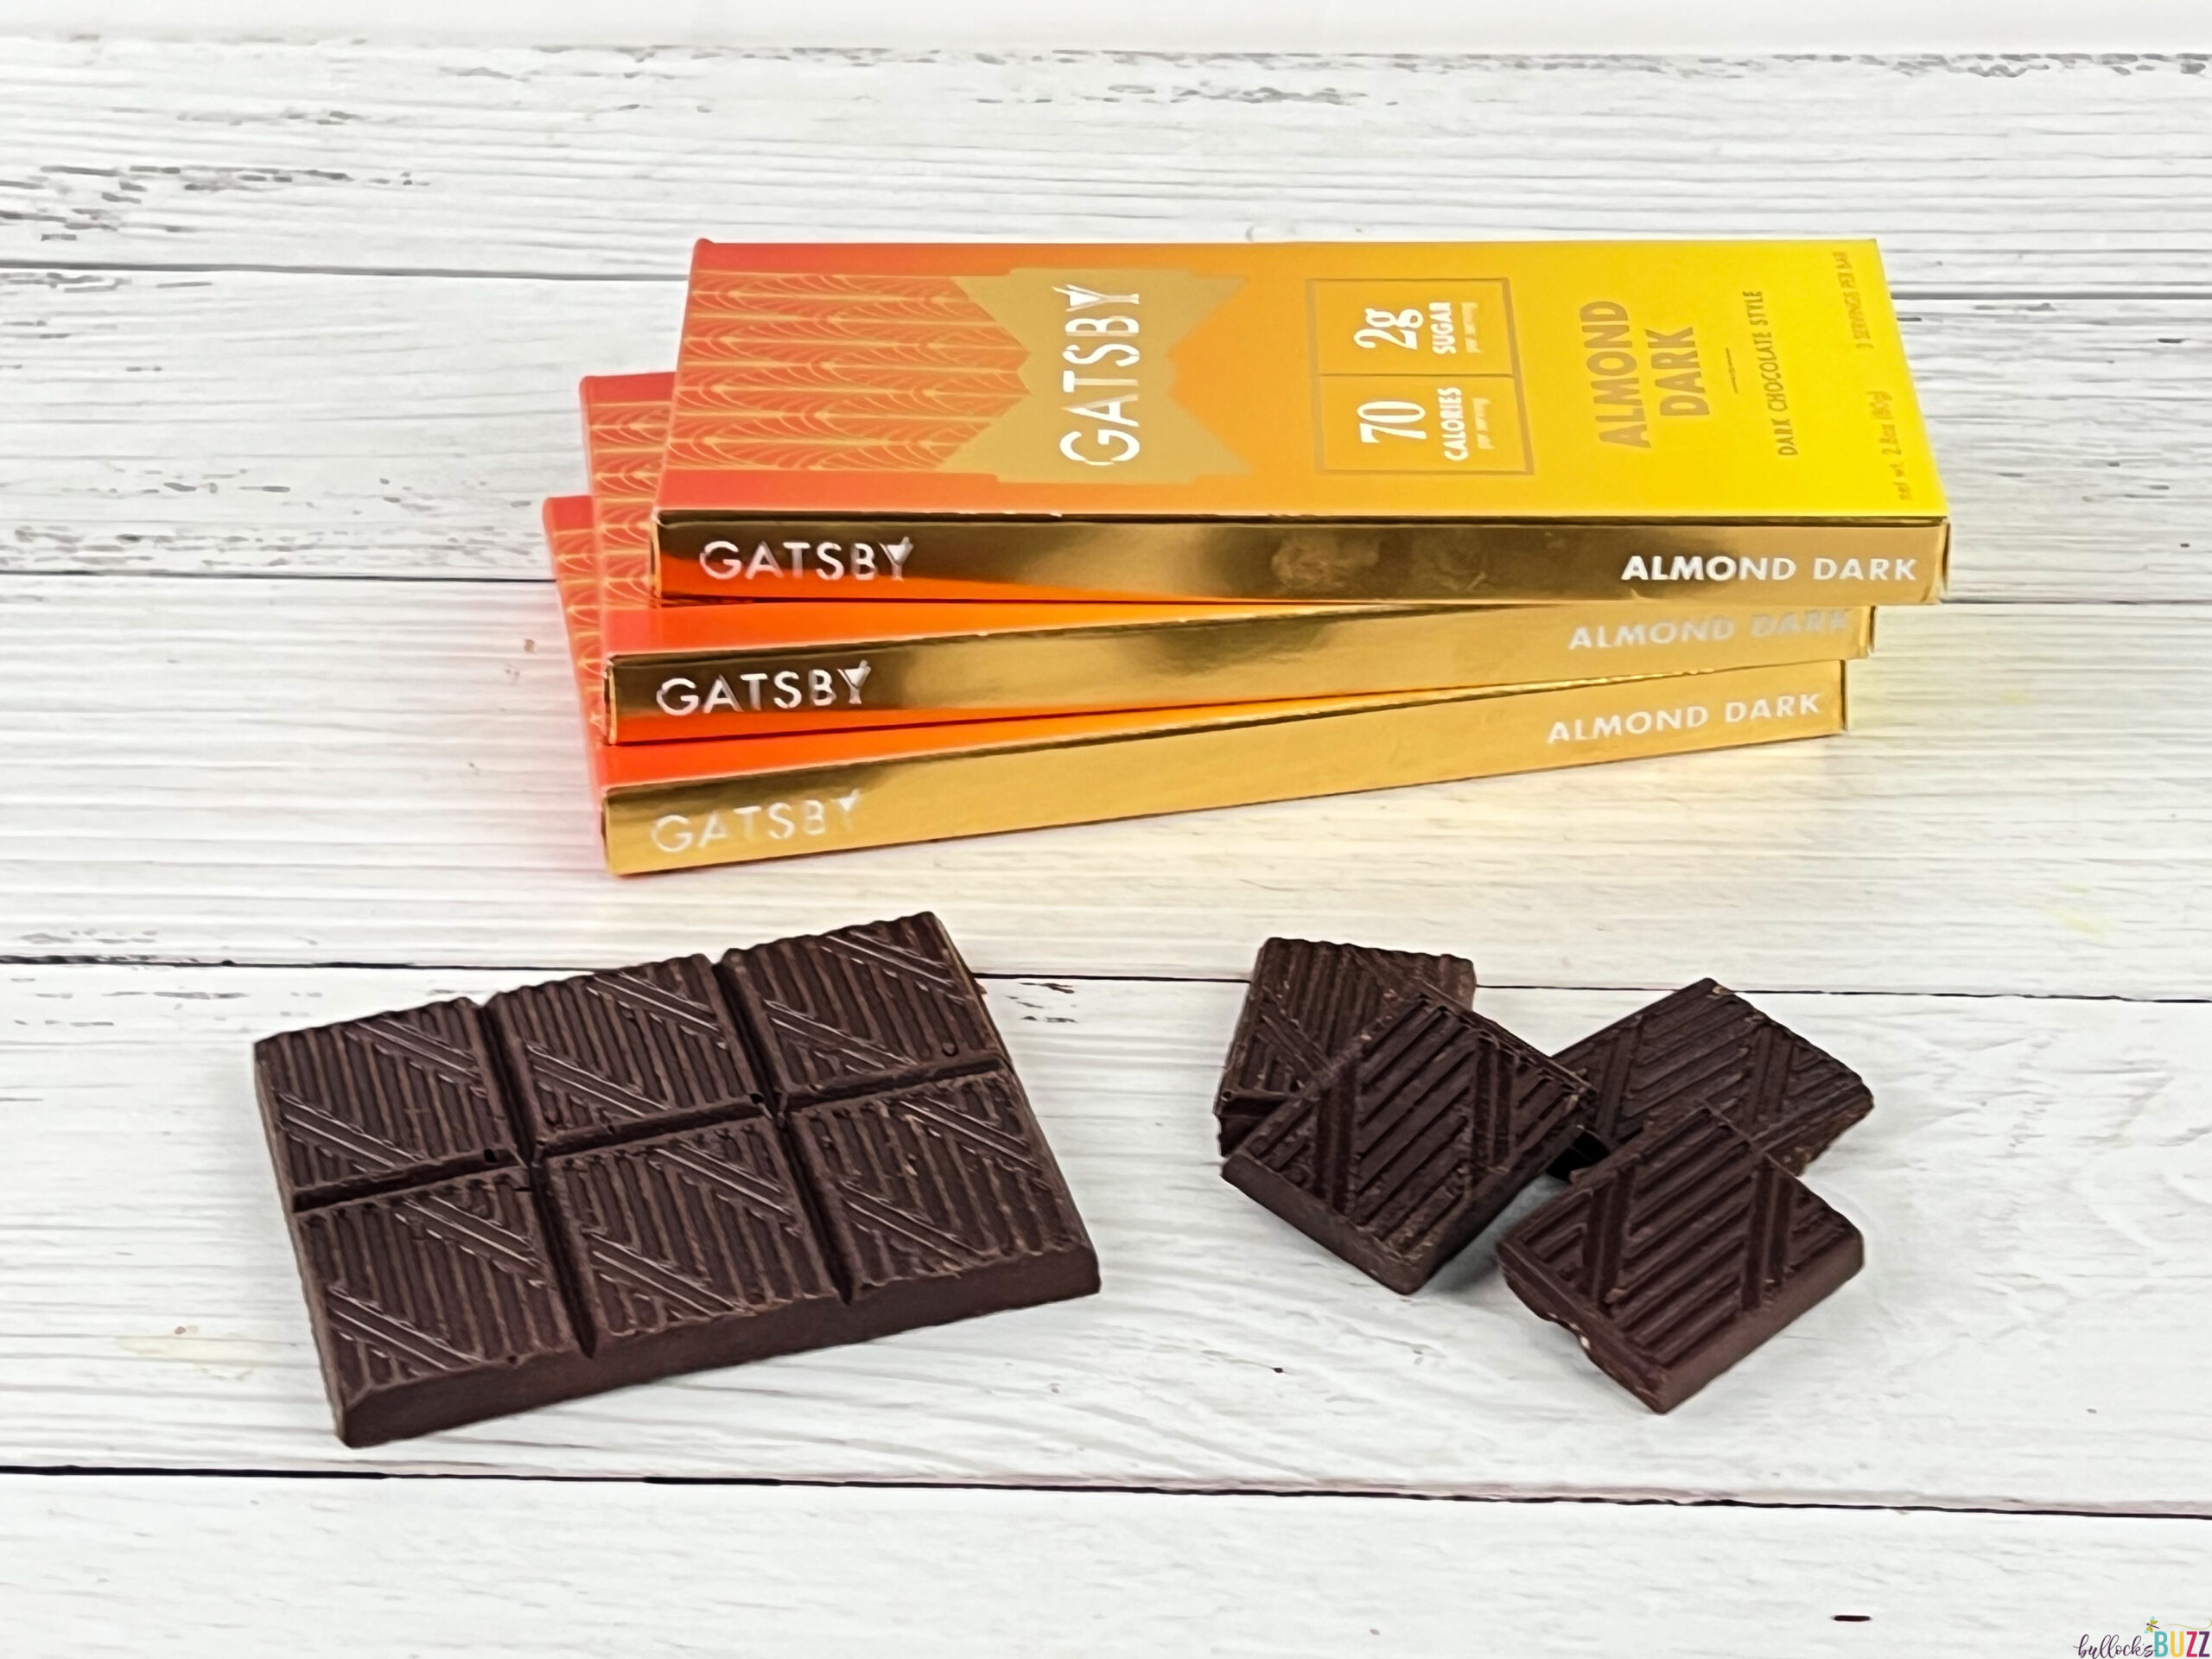 Gatsby Chocolate: Low-Cal, Low-Fat, Low-Sugar, Guilt-Free Indulgence -  Bullock's Buzz